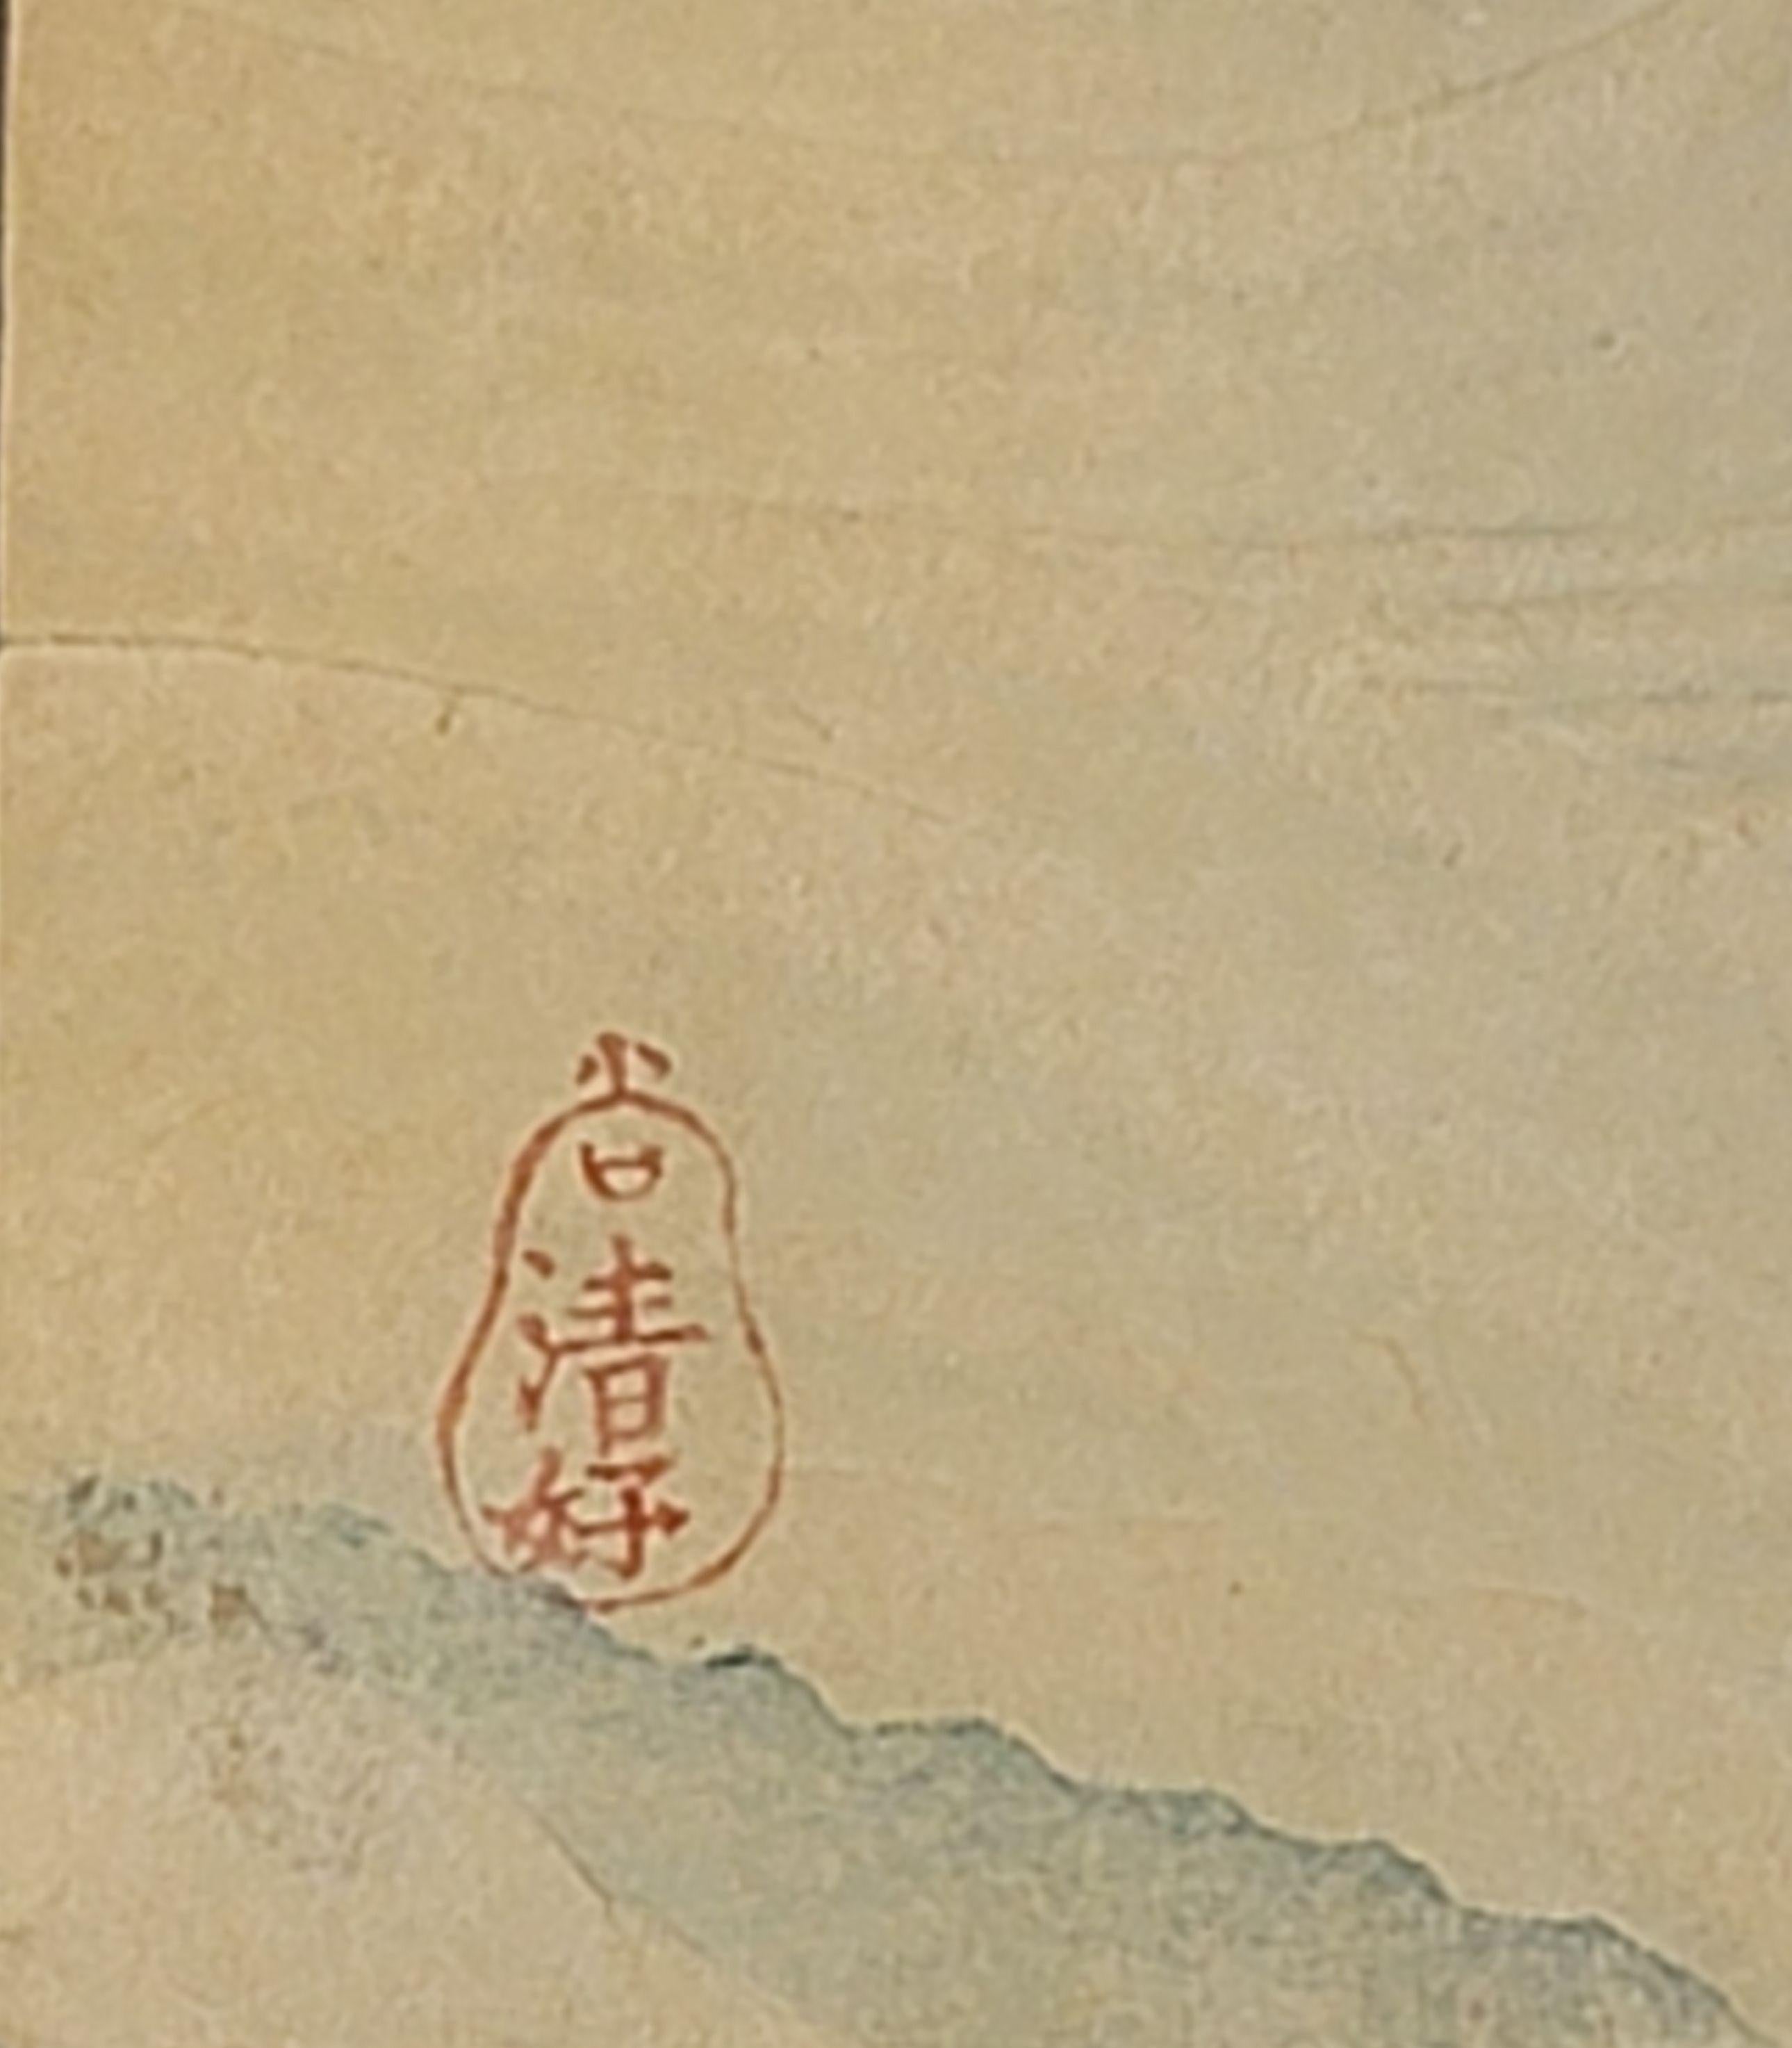 Japanese Woodblock Print by Yanagawa Shigenobu 柳川重信 '1787-1832' In Good Condition For Sale In Norton, MA